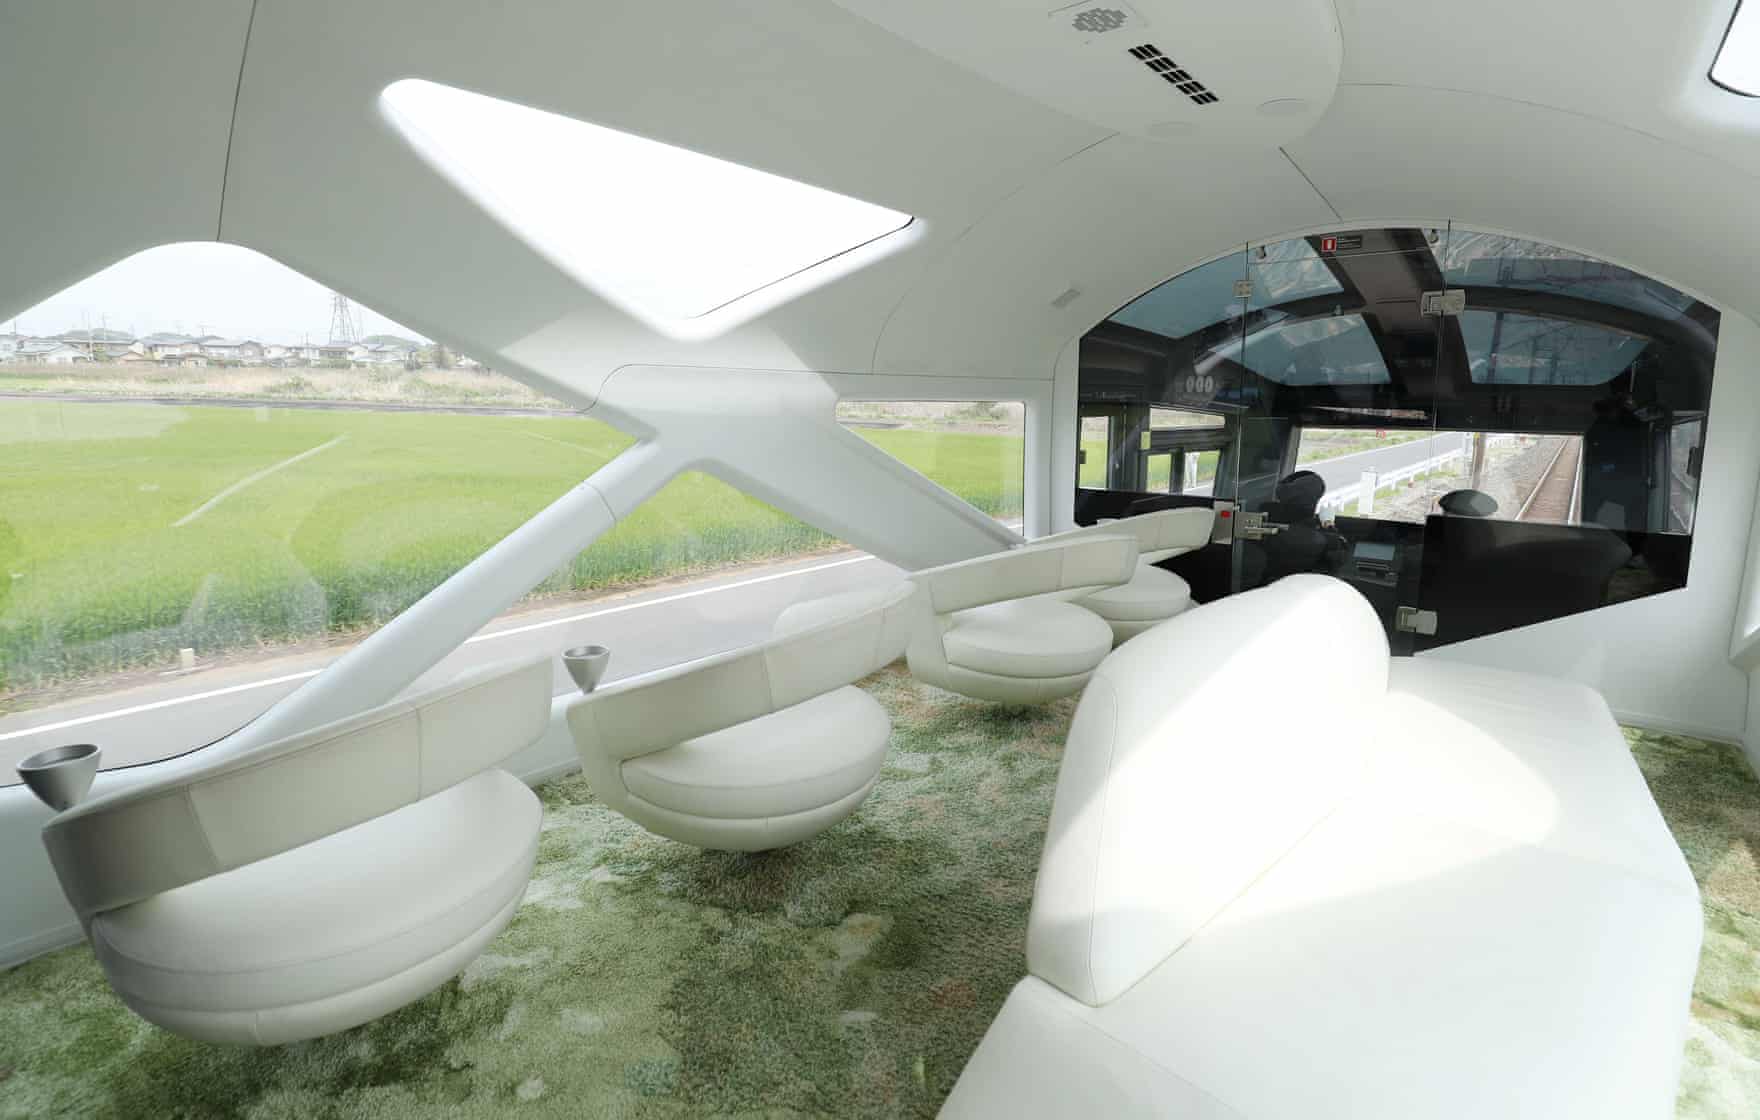 A peek inside the futuristic observatory car